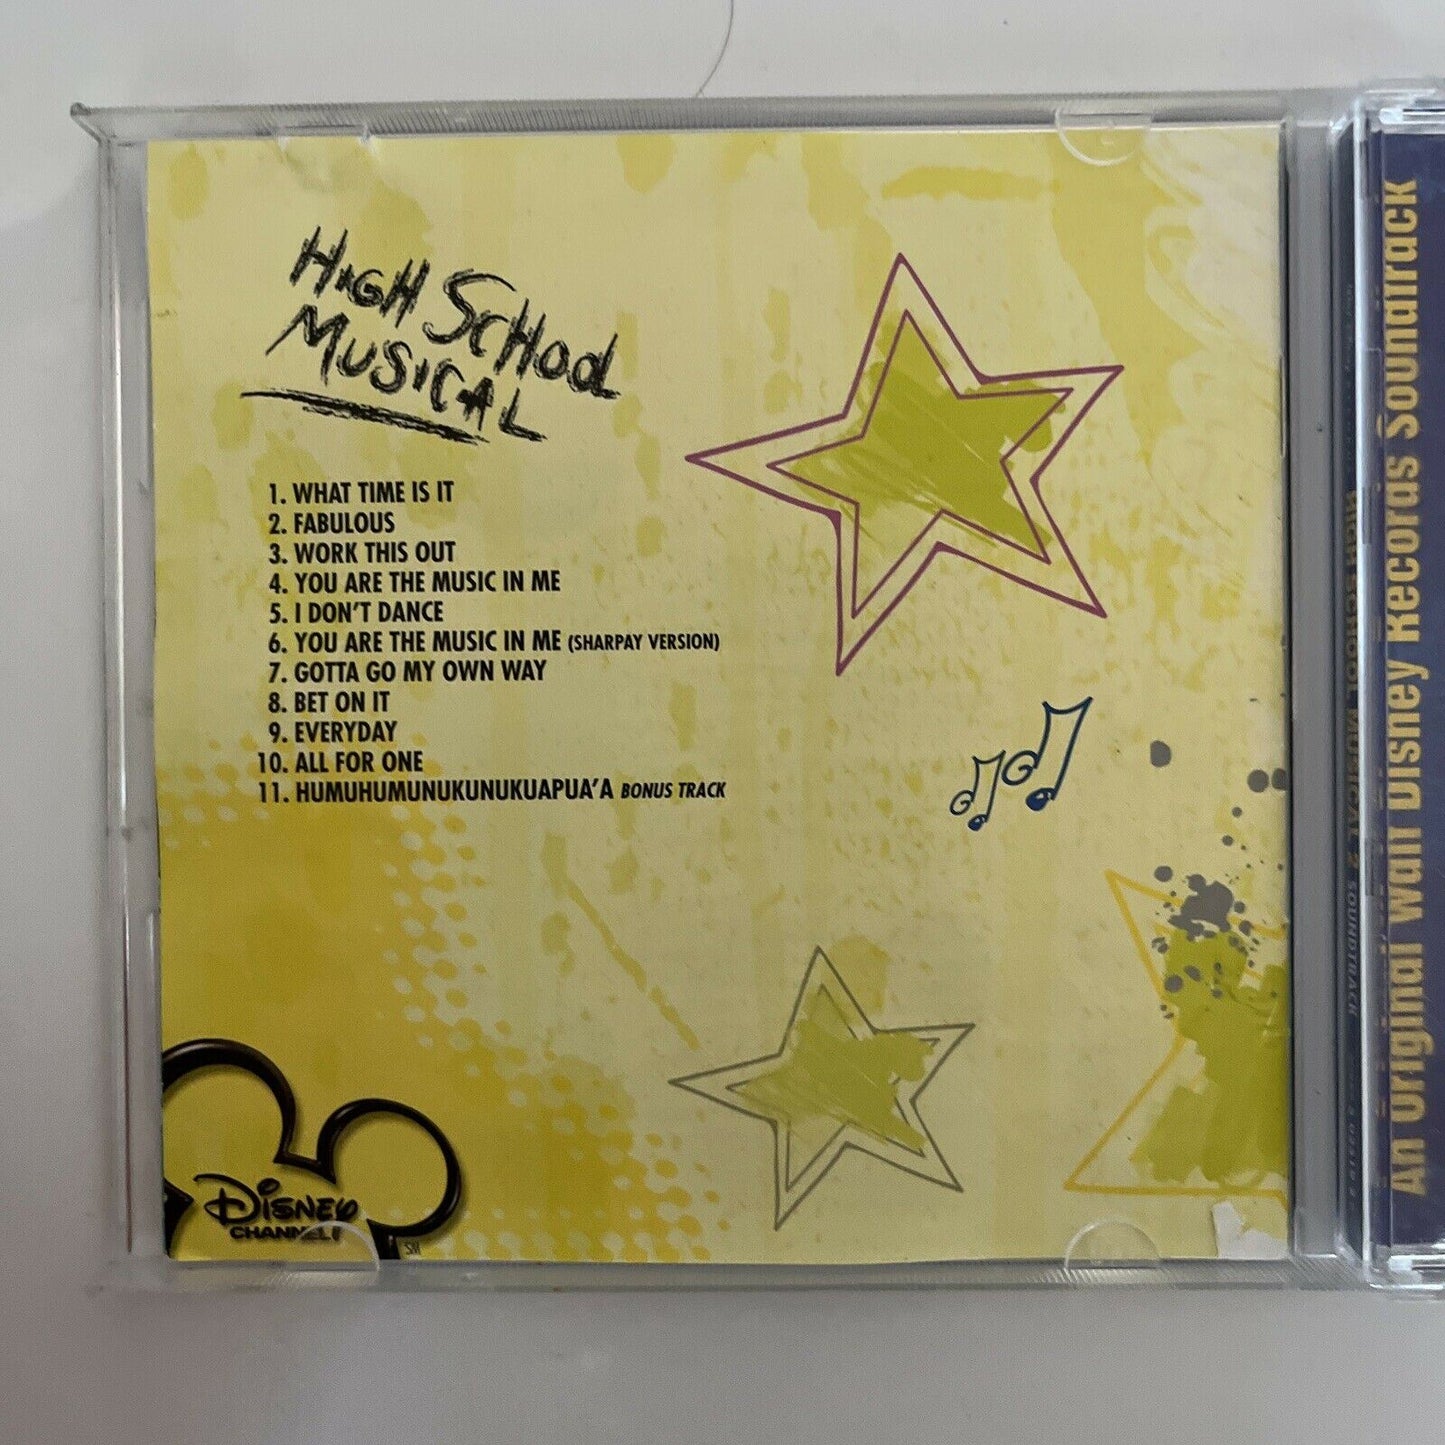 The High School Musical Cast – High School Musical 2 (Soundtrack) CD 2007 Album